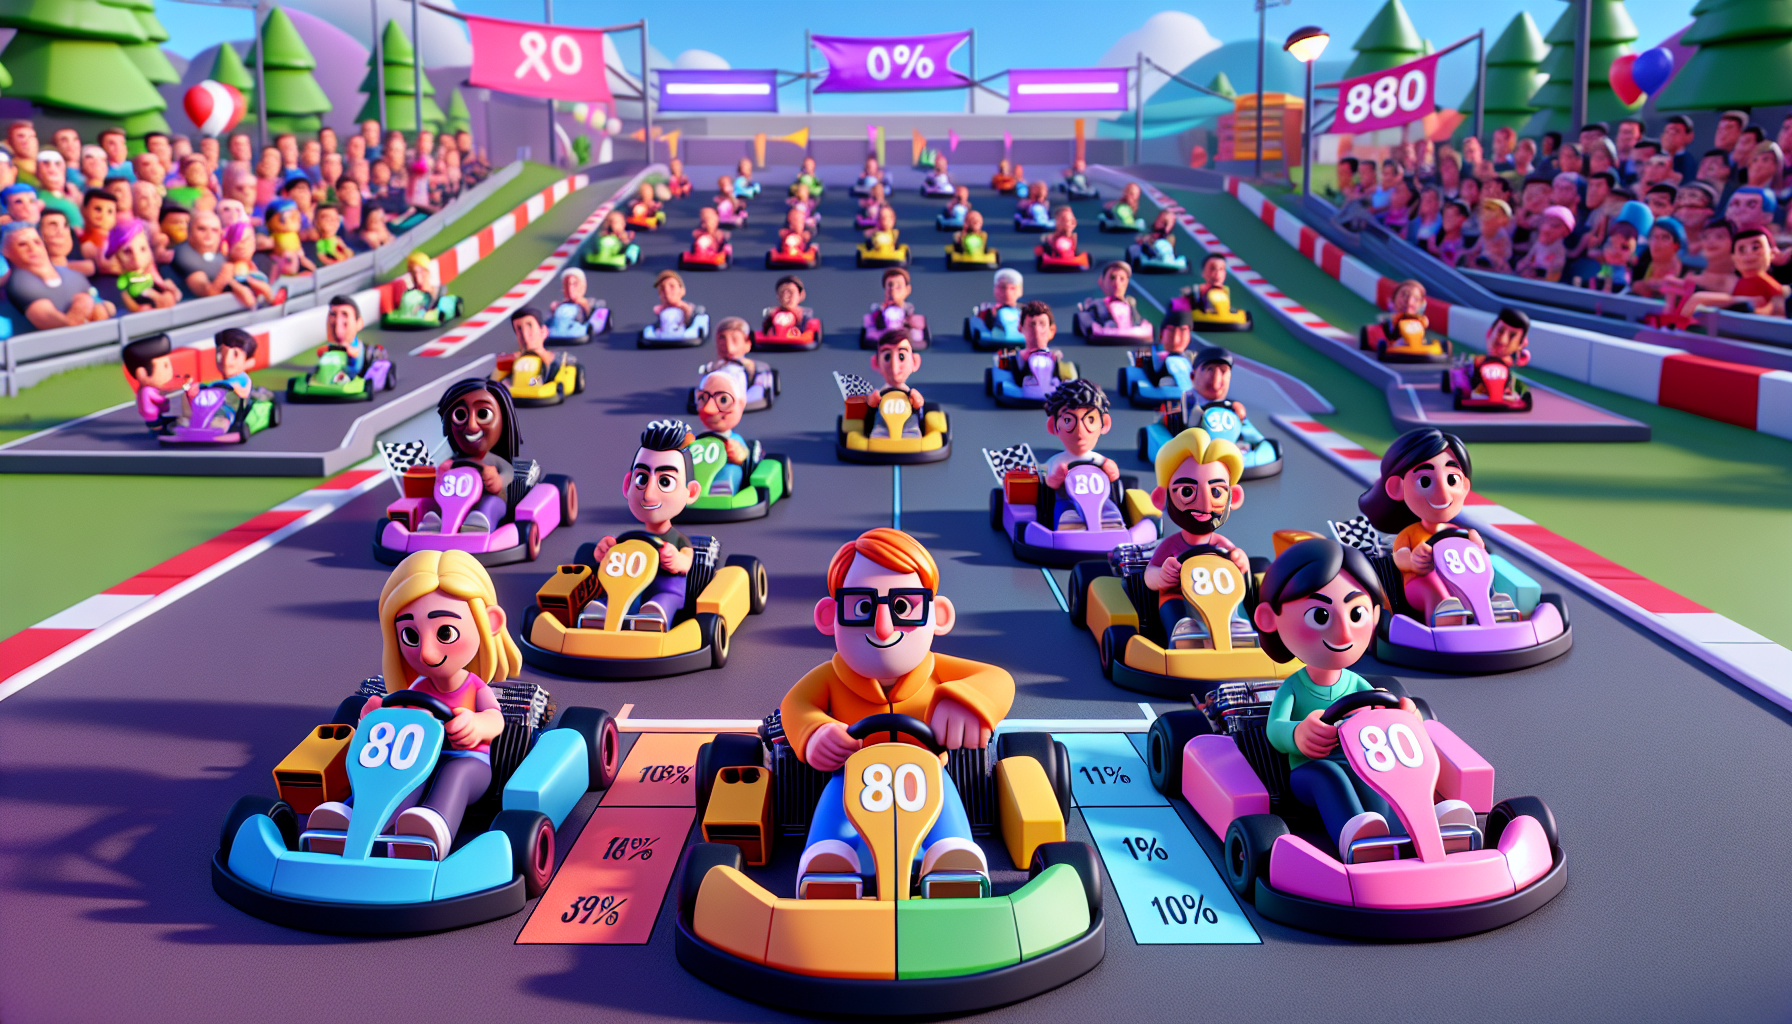 Applying Pareto's Economic Theories to Identify the Top Mario Kart 8 Racer